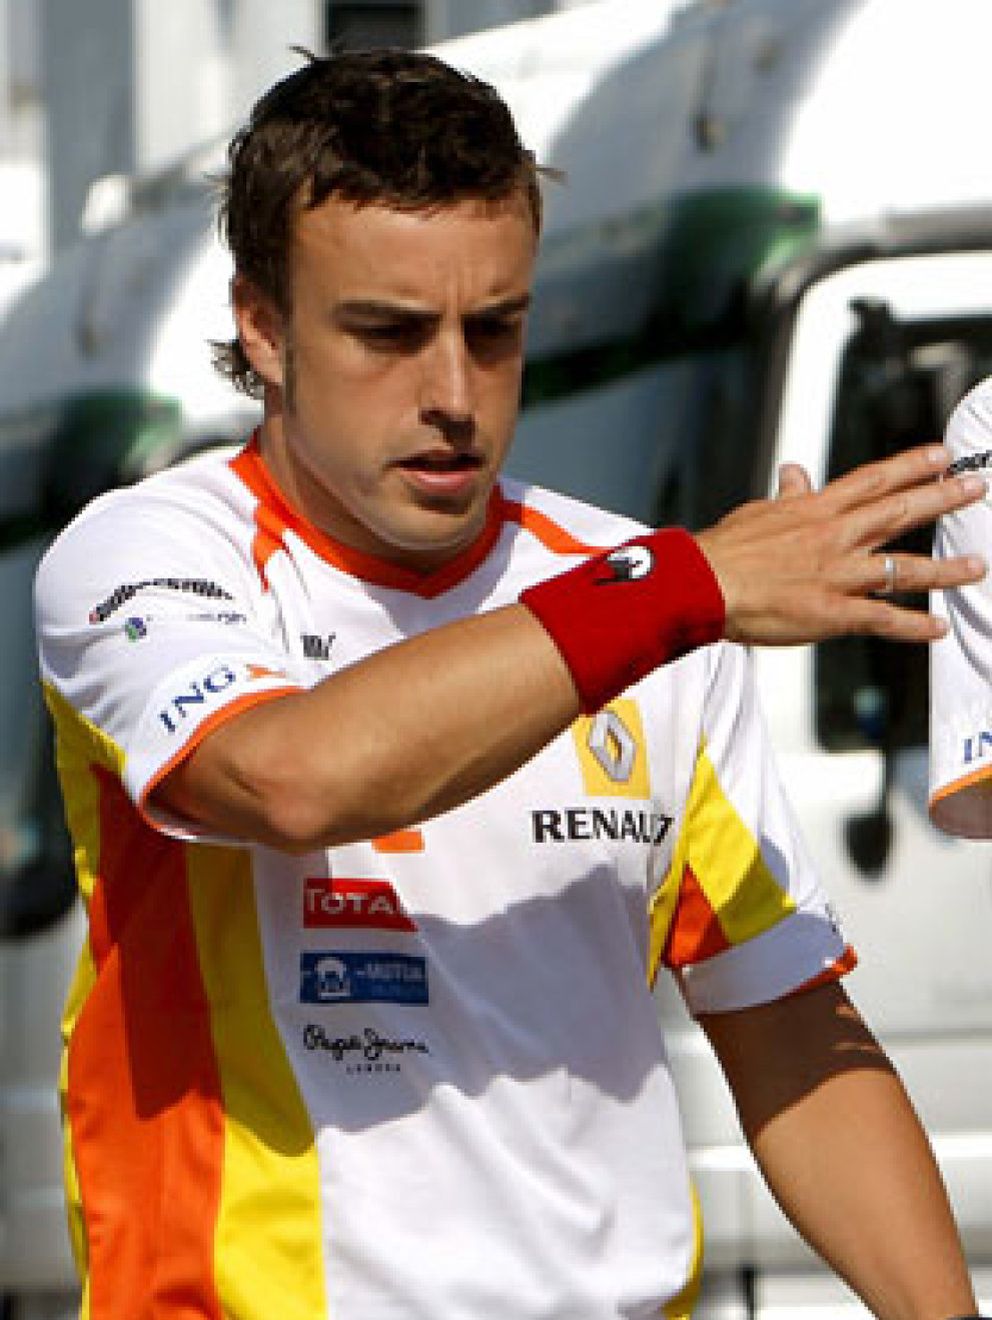 Foto: Mutua Madrileña e ING abandonan Renault, no a Alonso